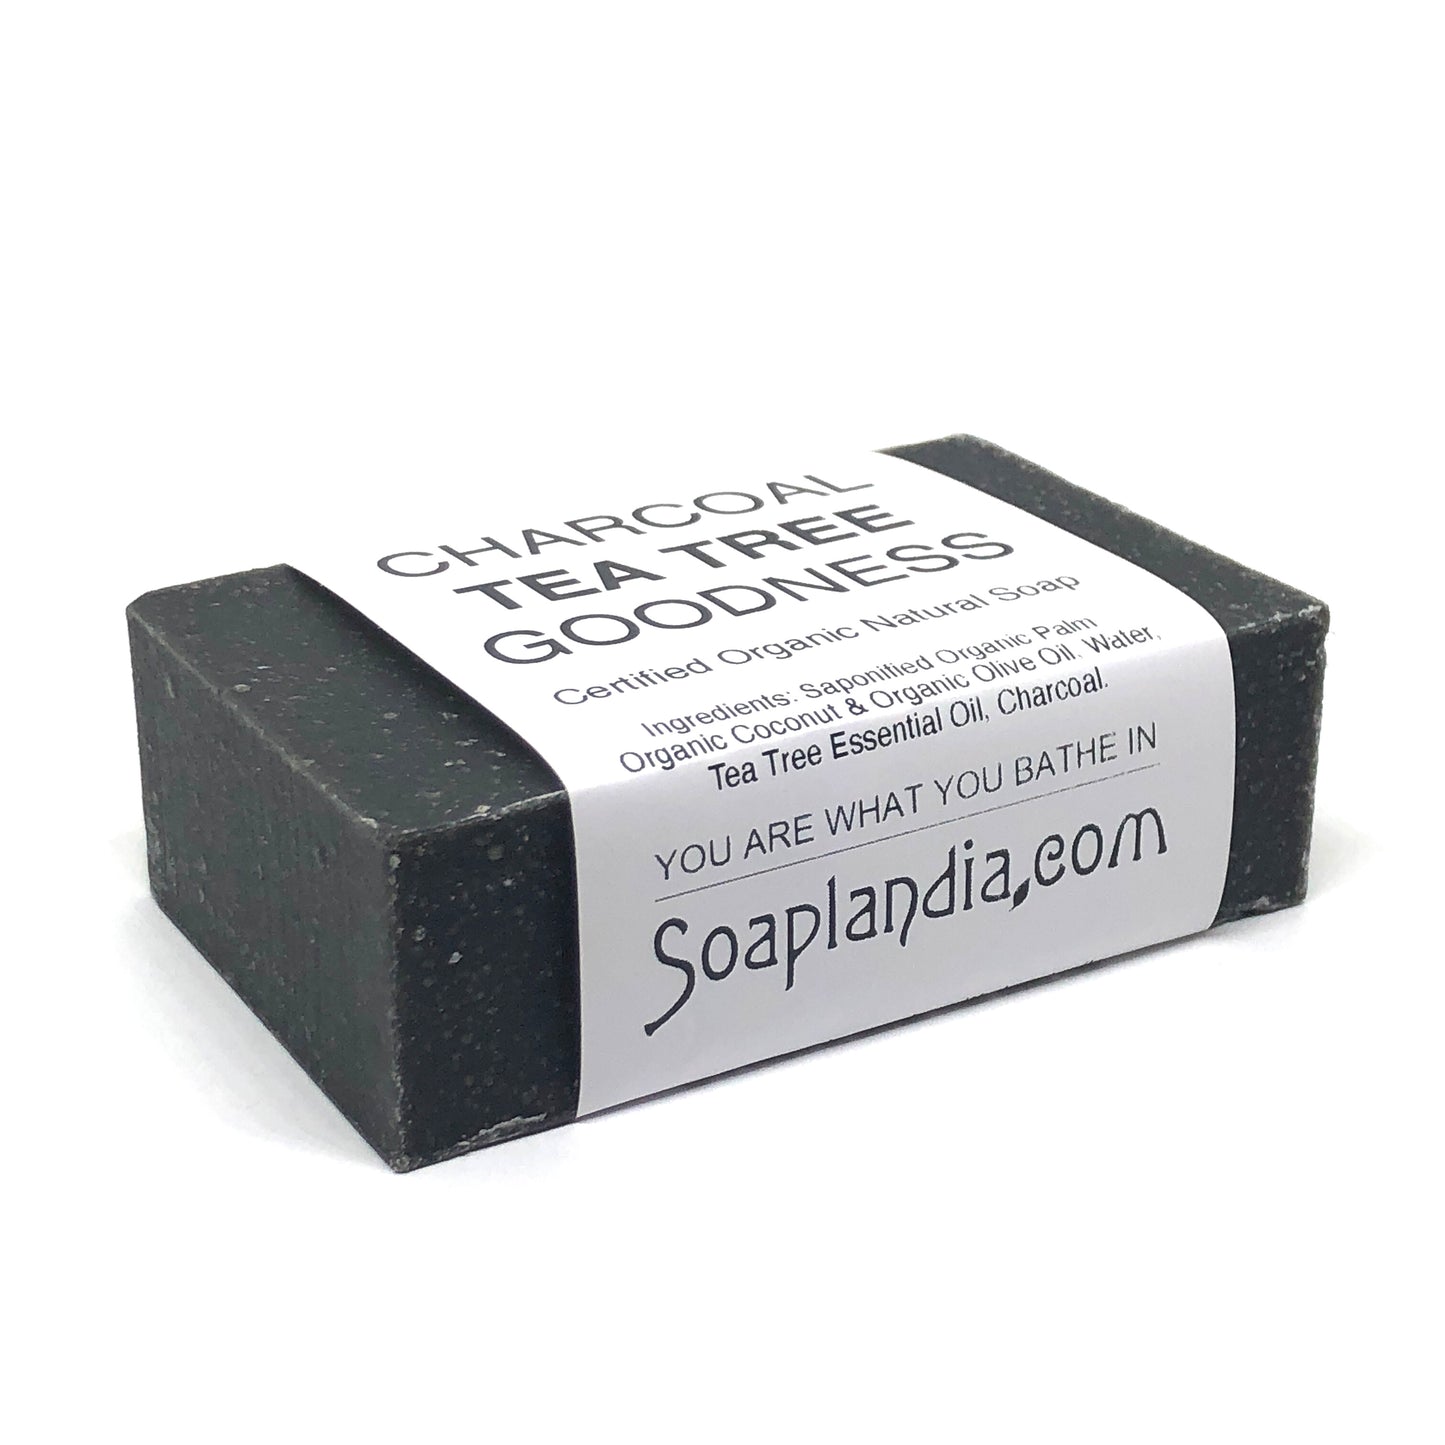 Charcoal Tea Tree Goodness Bar Soap, Certified Organic